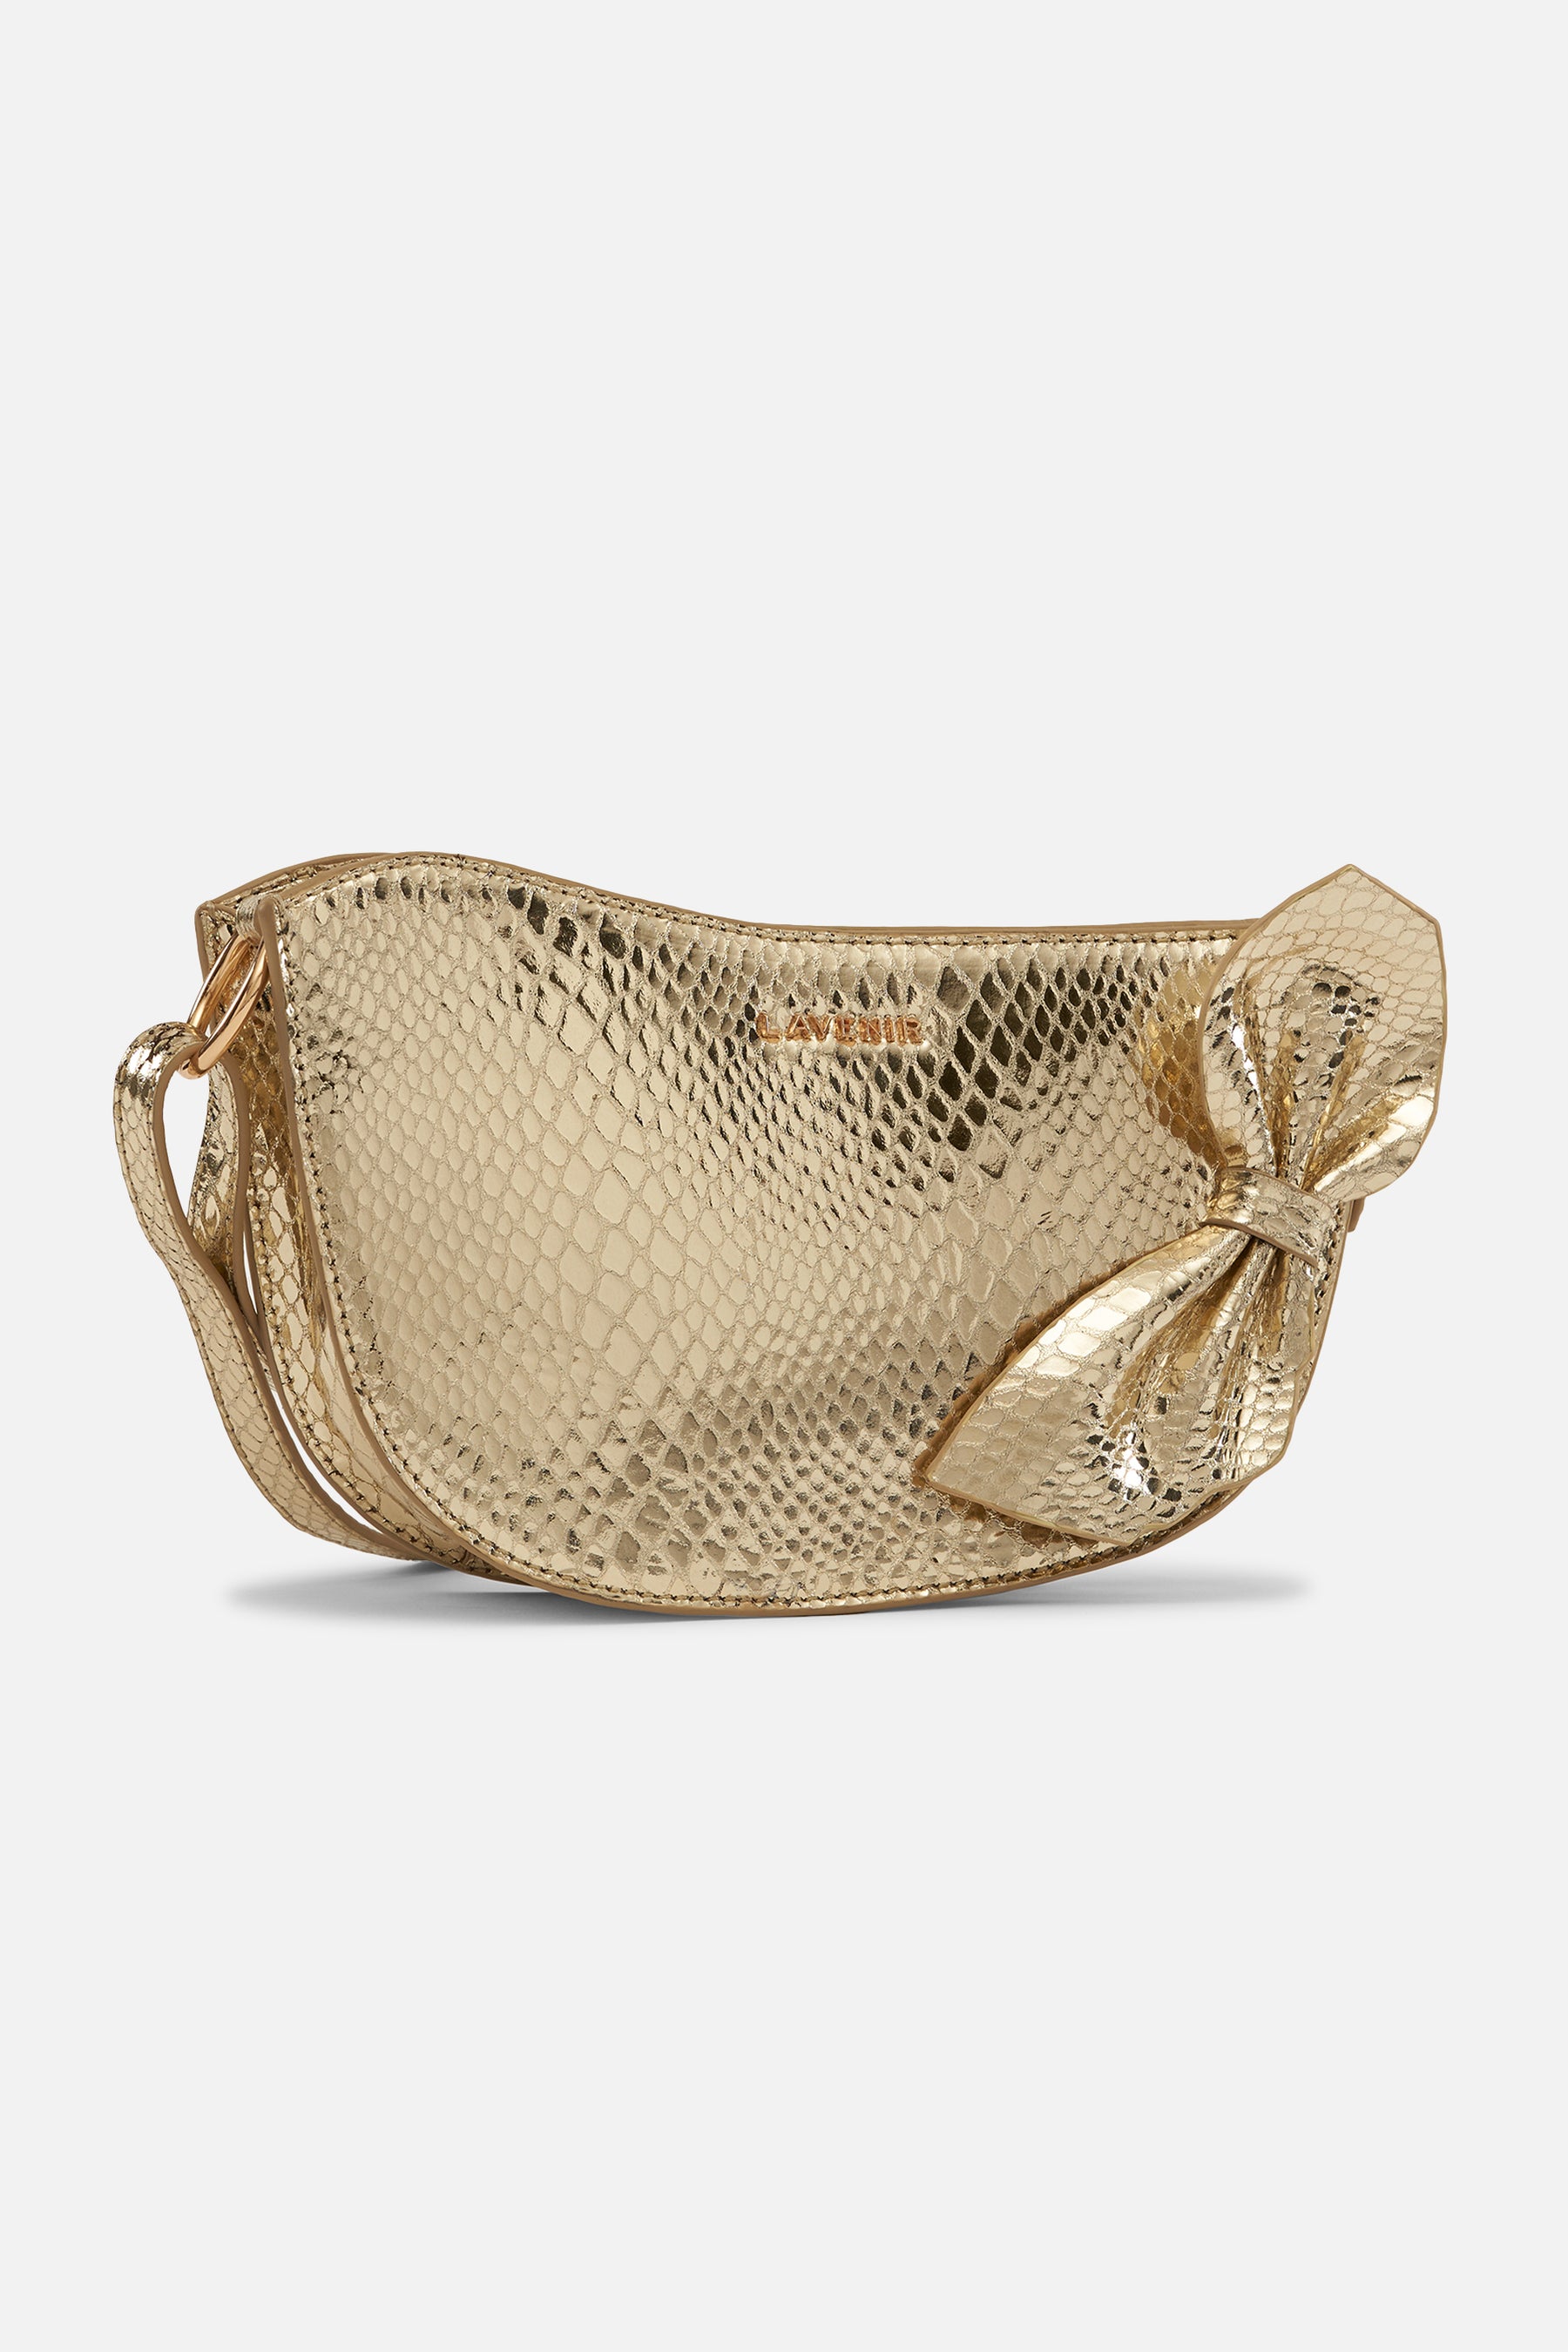 Raessa - Bow Bag - Gold Metallic Python Print